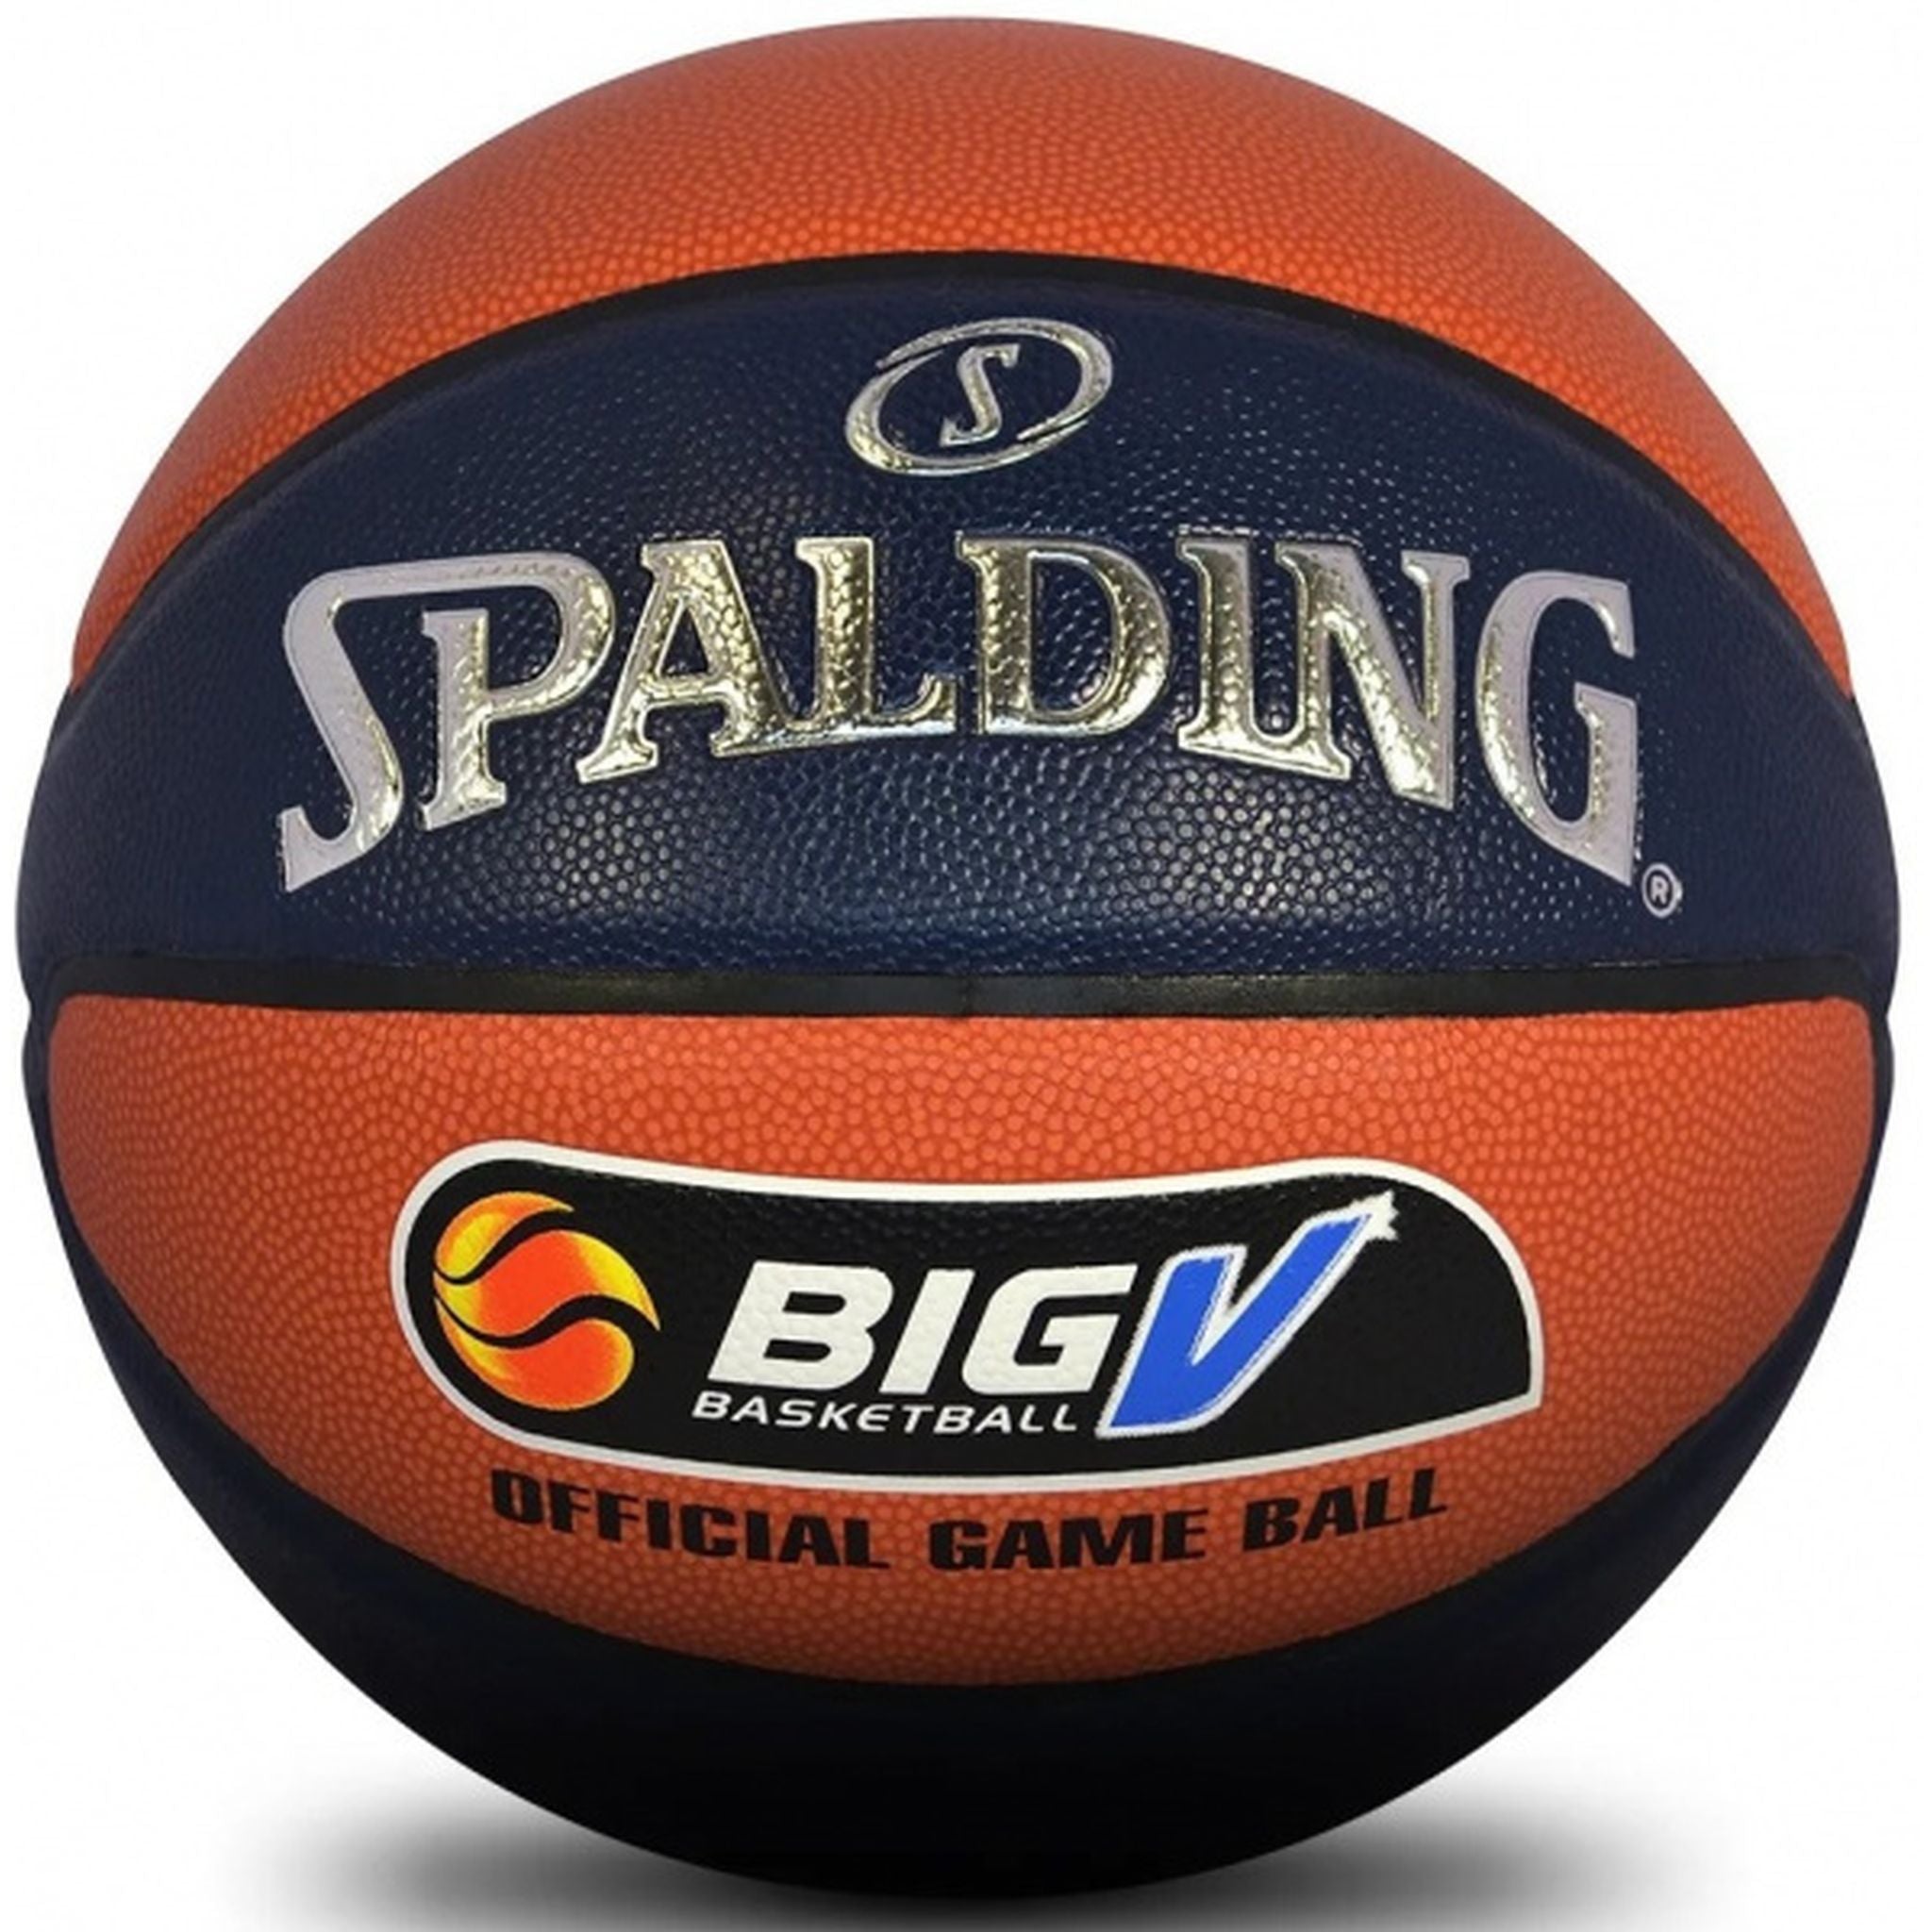 Spalding TF-1000 Legacy BIG V Official Game Ball